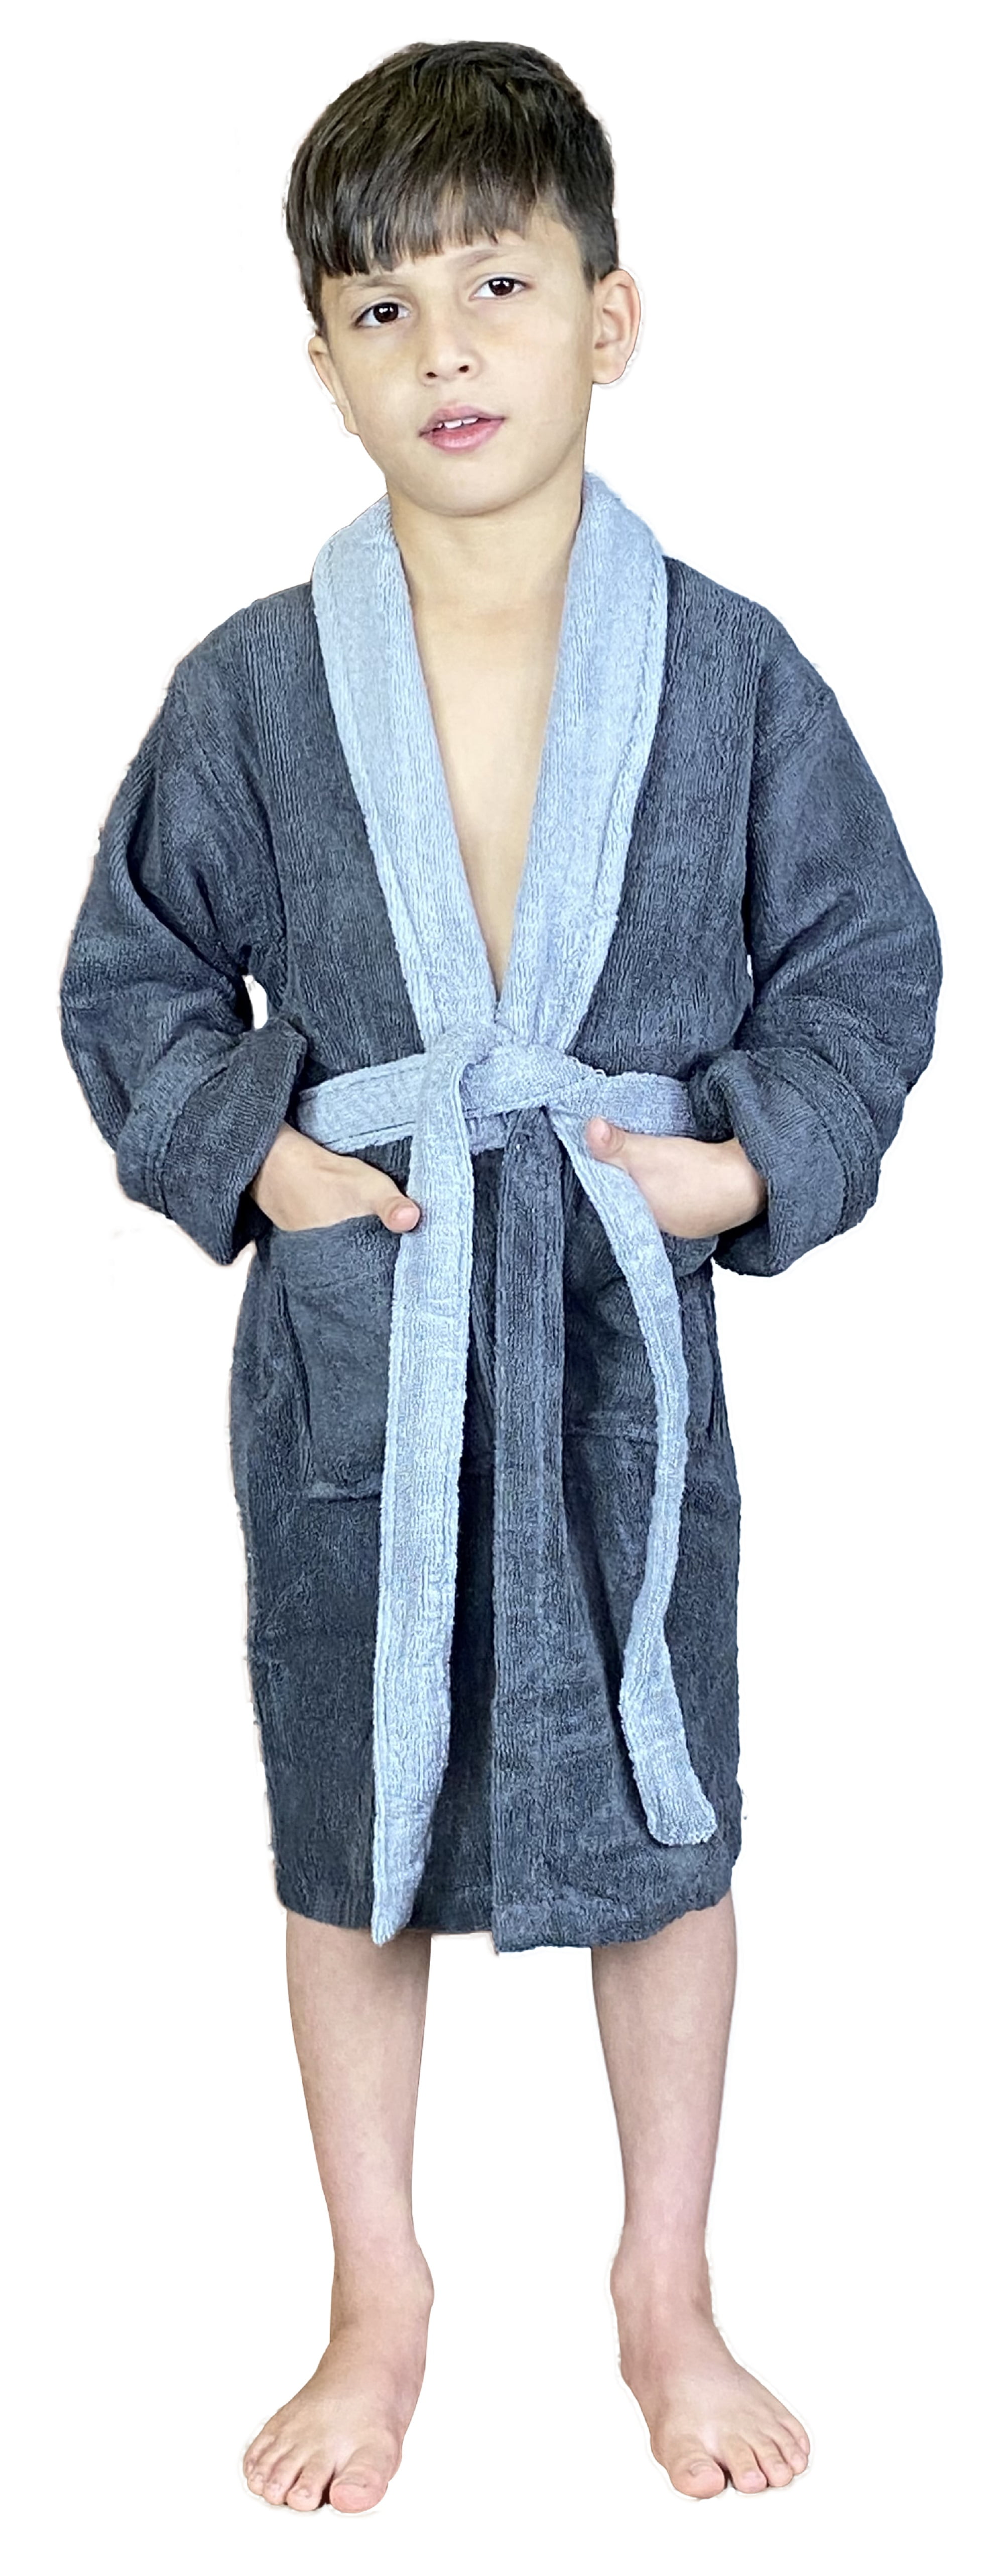 Bath Robe Childrens Clothes Kids Bathrobe Towelling Robes Dressing Gown for Boys Hooded Bath Towel Super Soft 100% Cotton Oeko-TEX® 